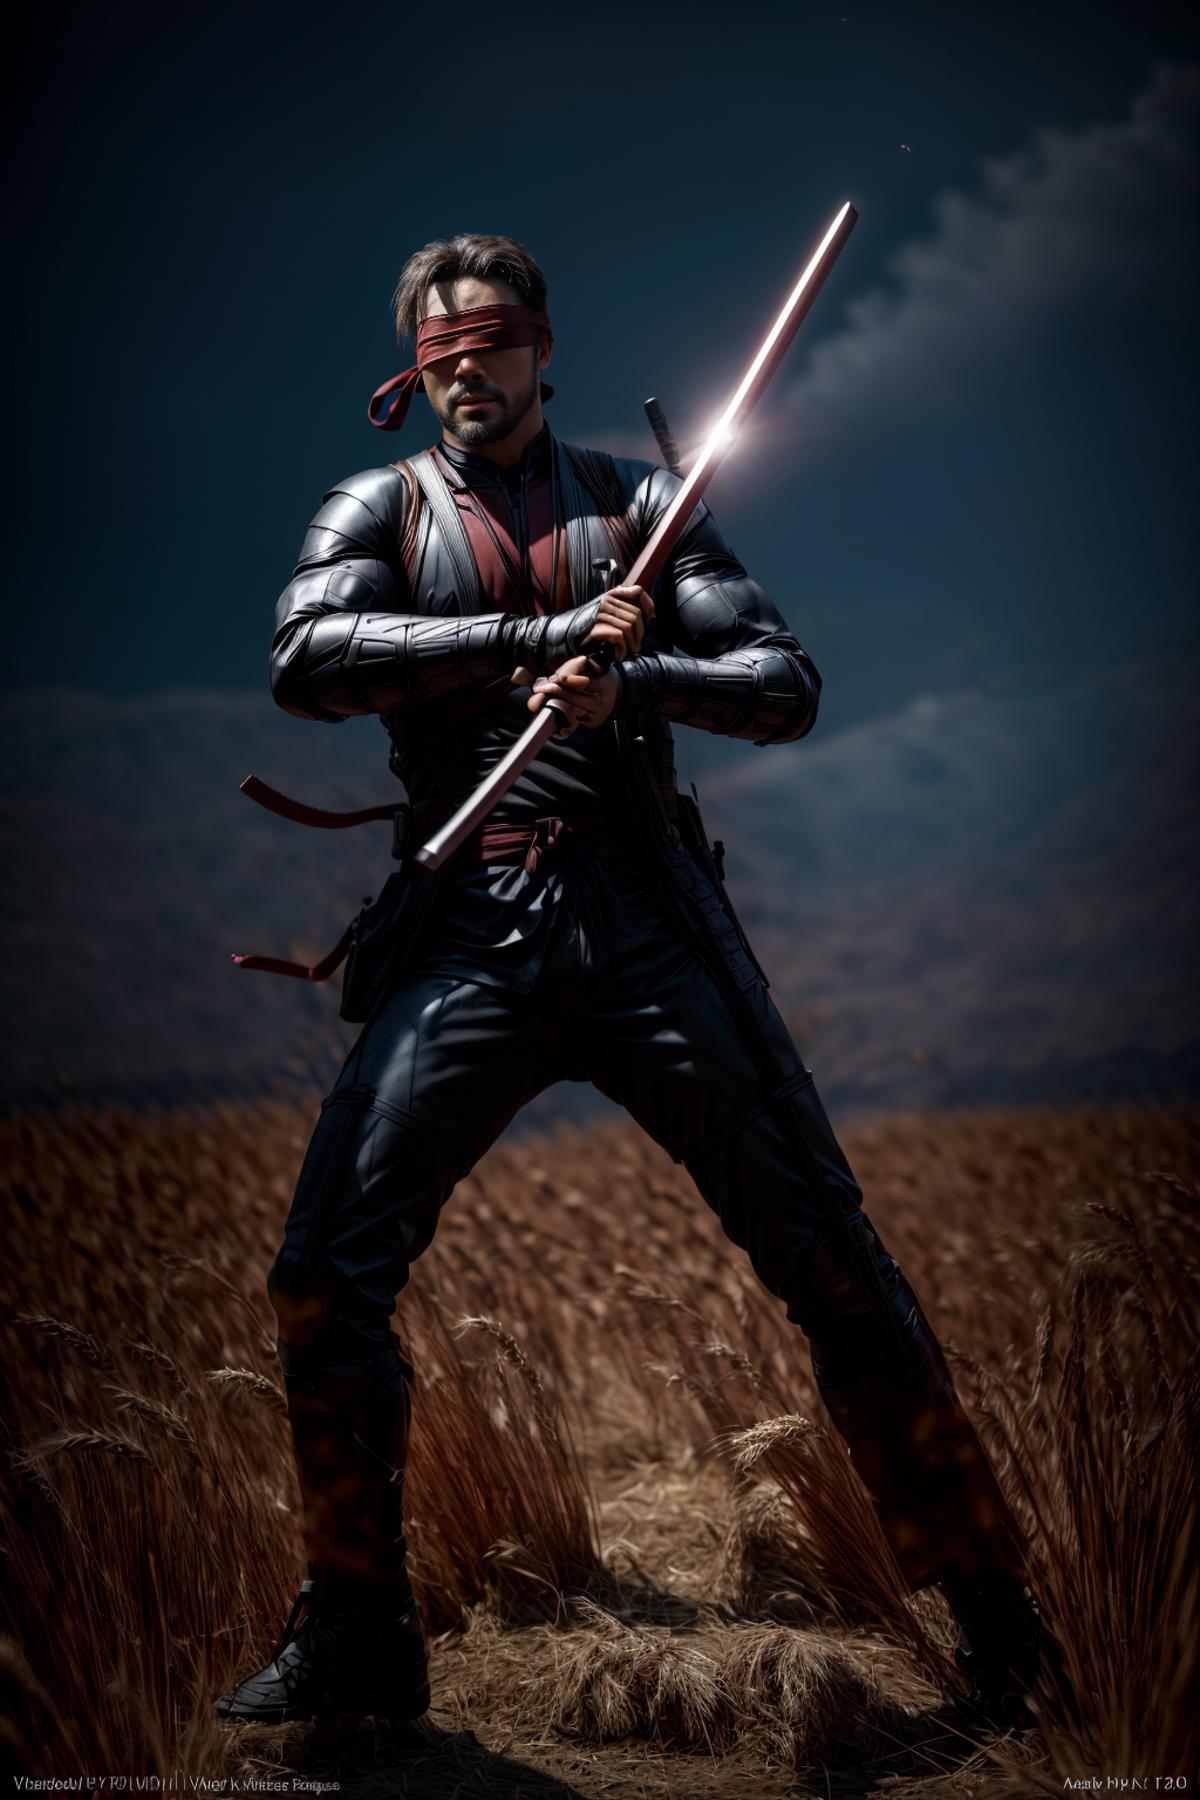 Kenshi (Mortal Kombat) image by DeViLDoNia